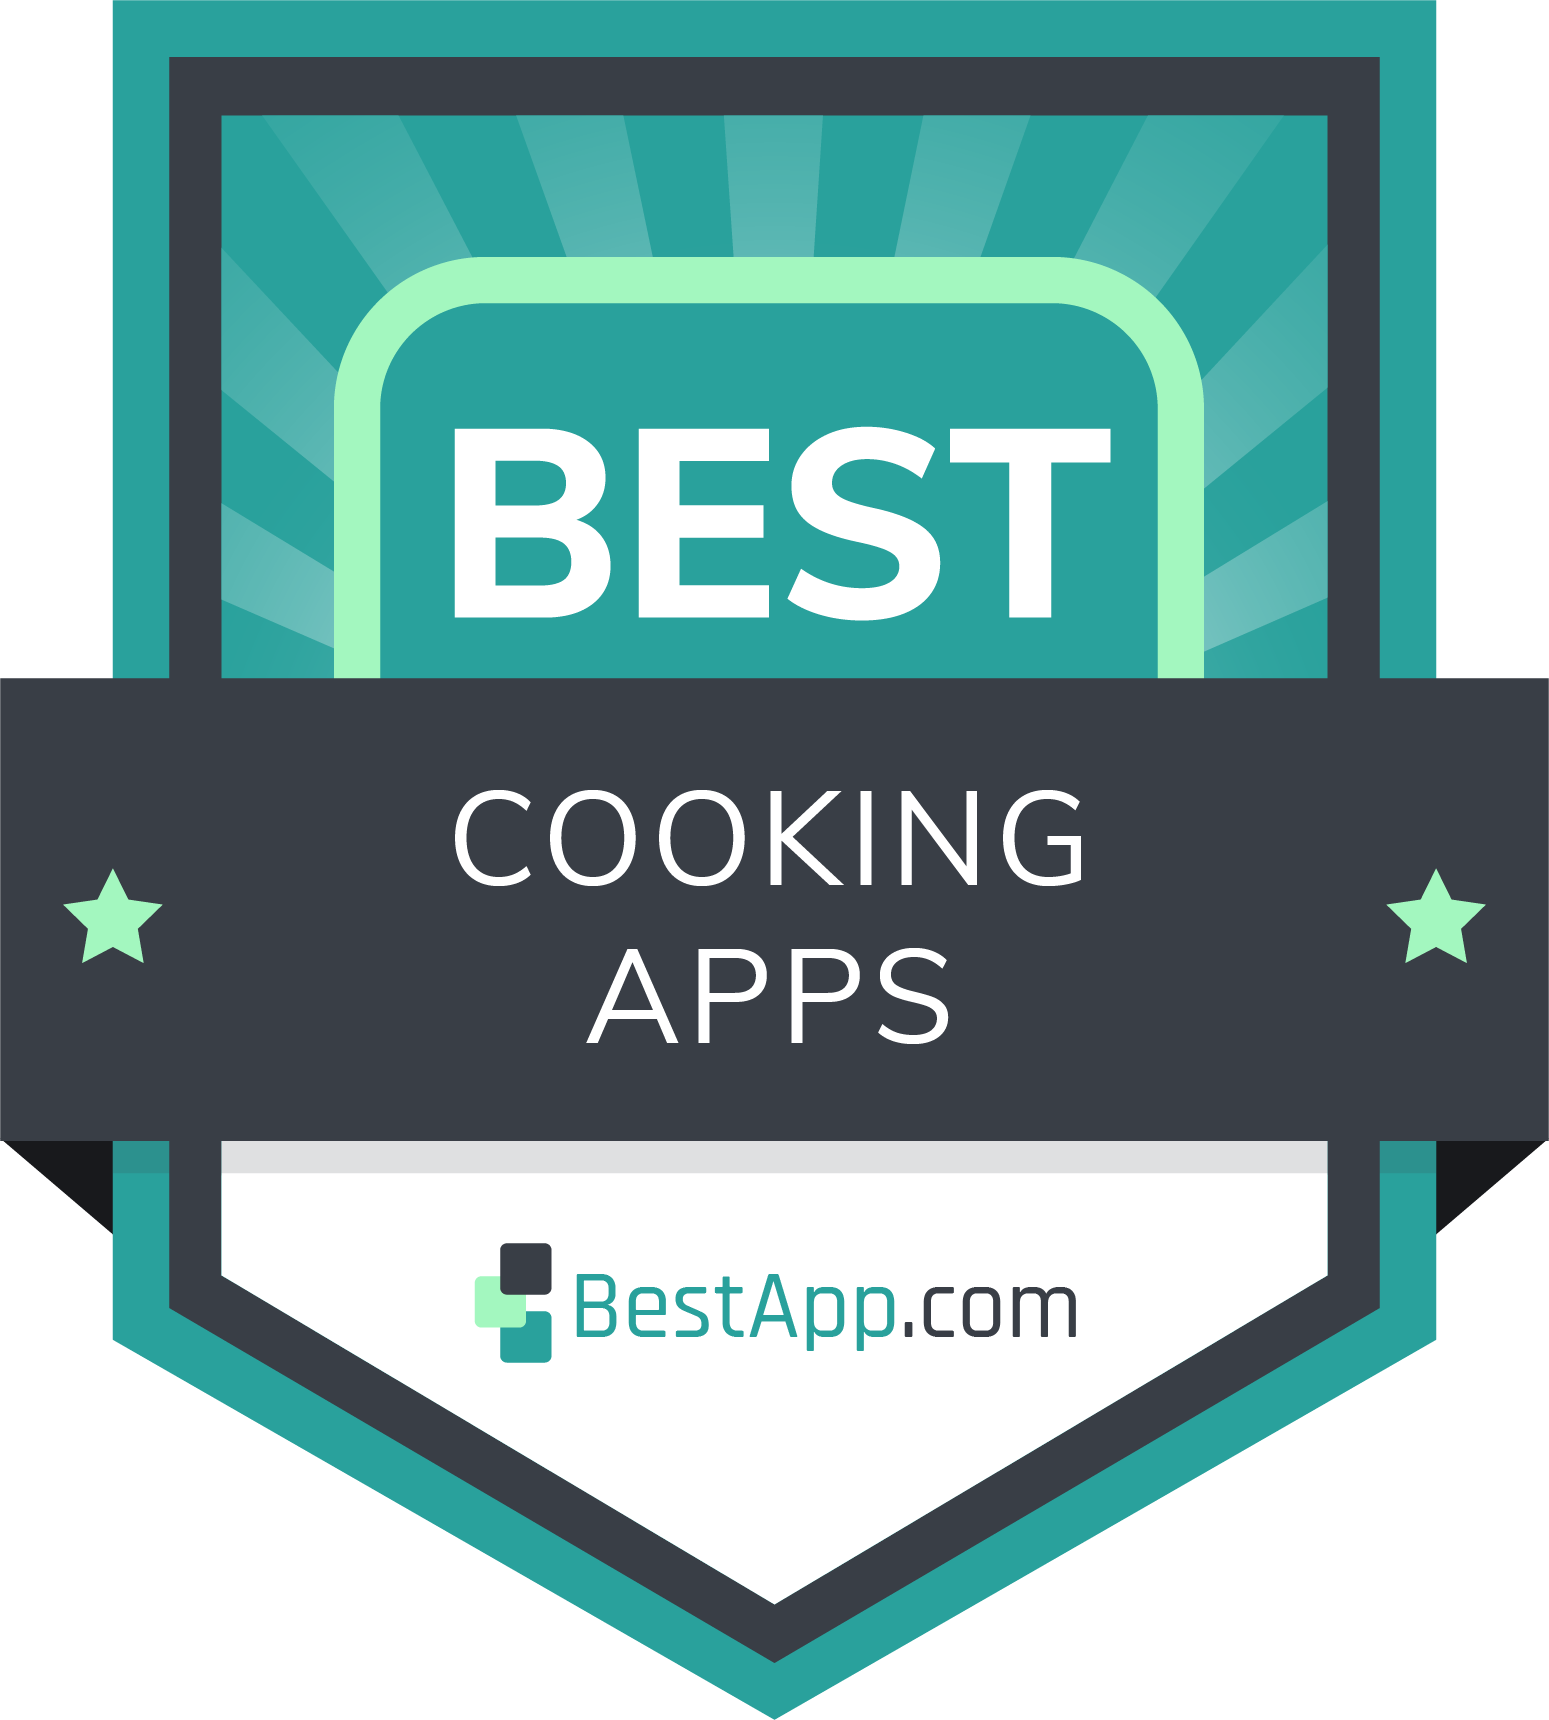 Best Cooking Apps Badge 